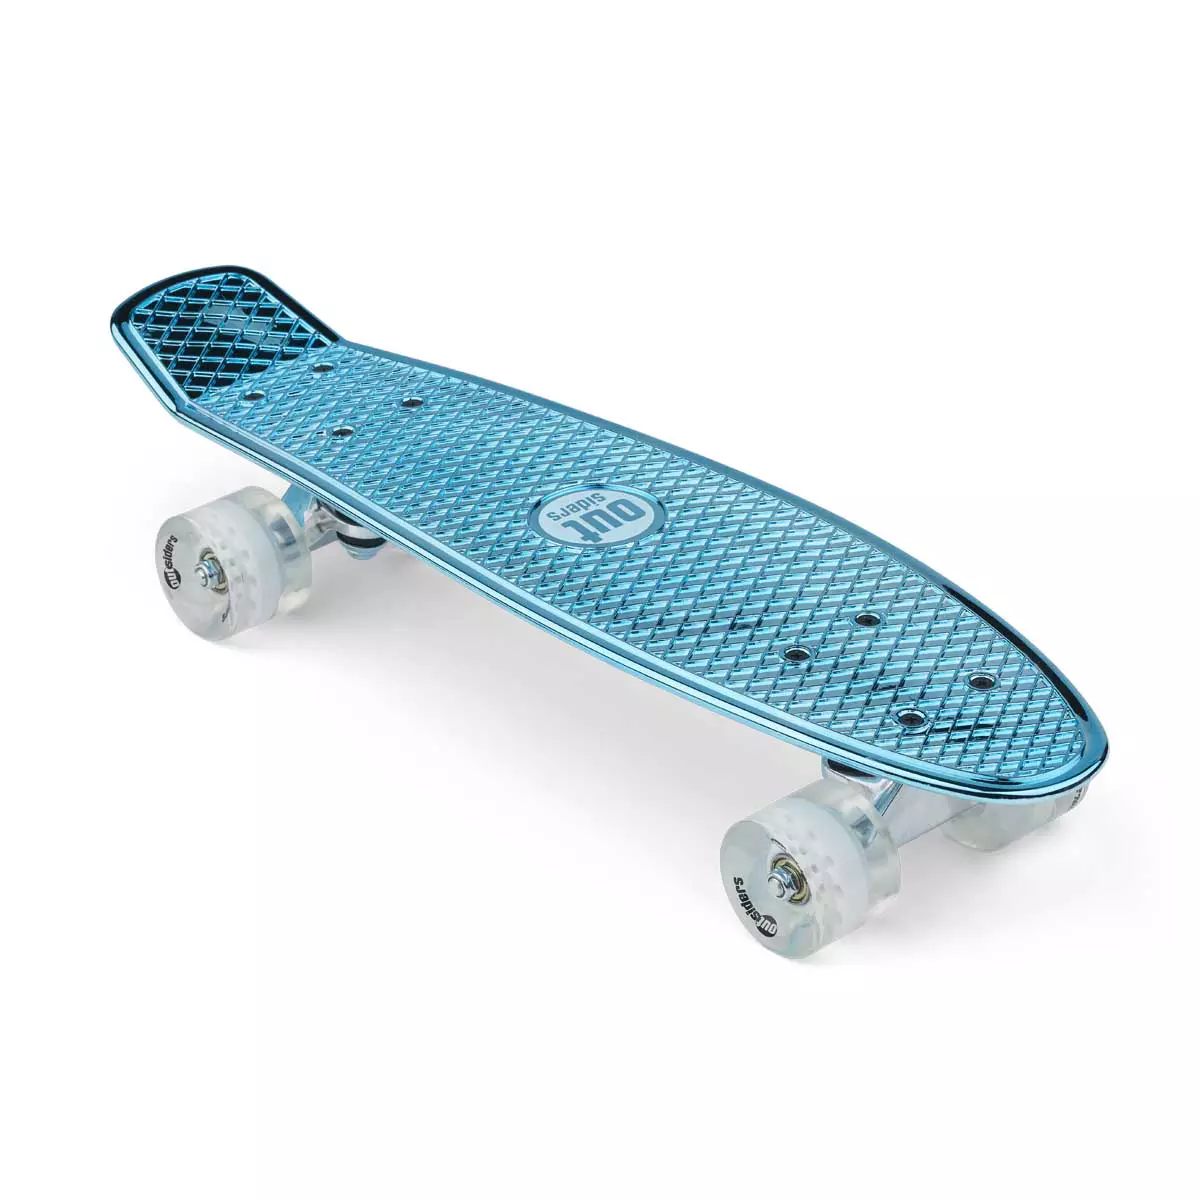 Outsiders Chrome Edition Retro Skateboard Blue